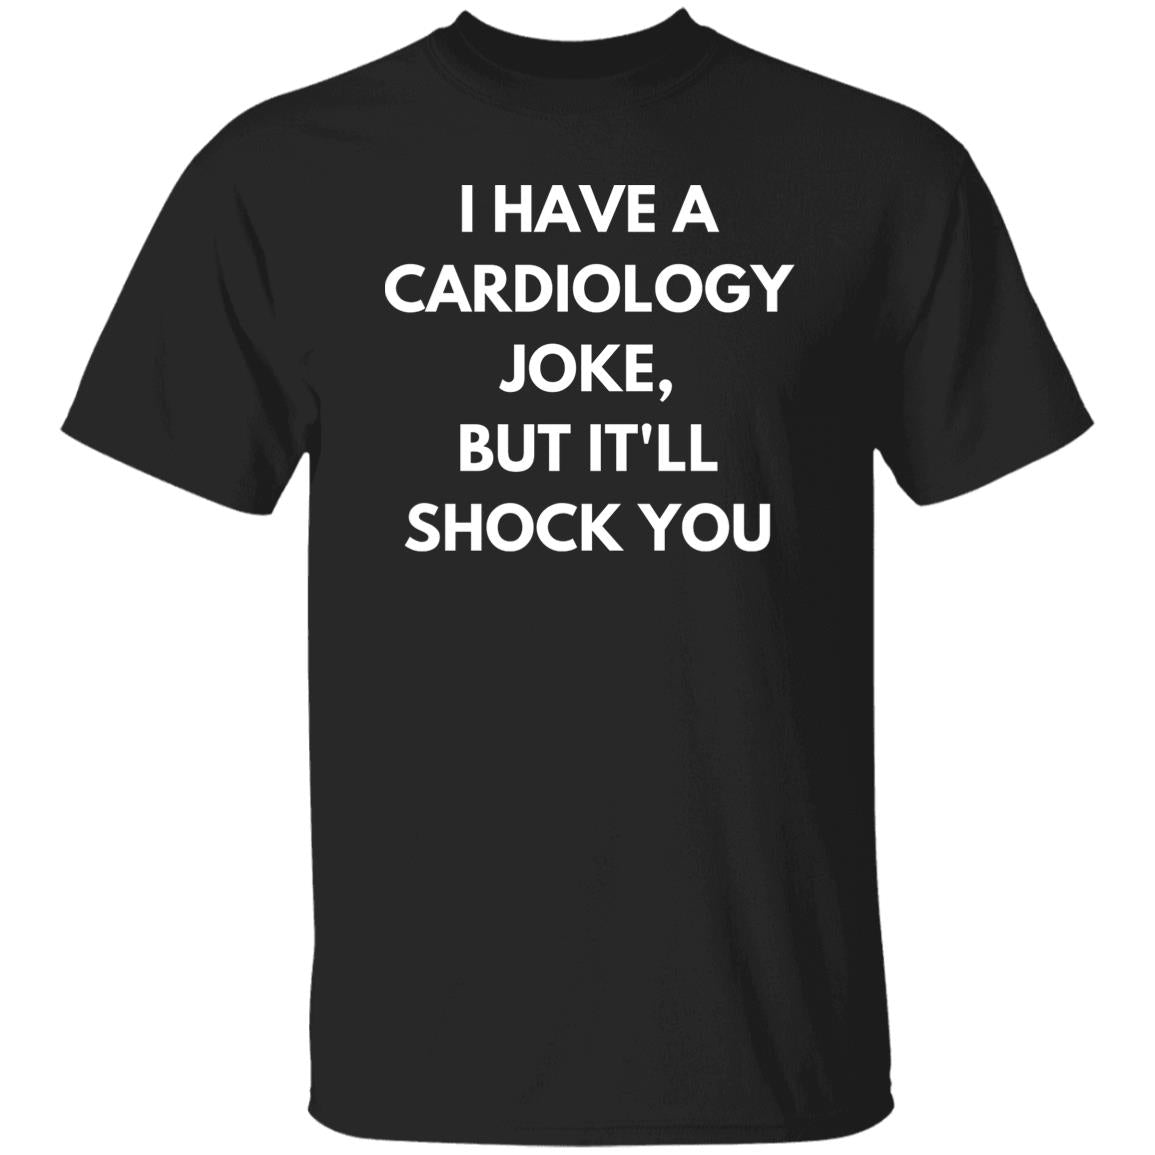 Funny Cardiology Joke Unisex Shirt, Cardiac nurse tee Black S-2XL-Black-Family-Gift-Planet